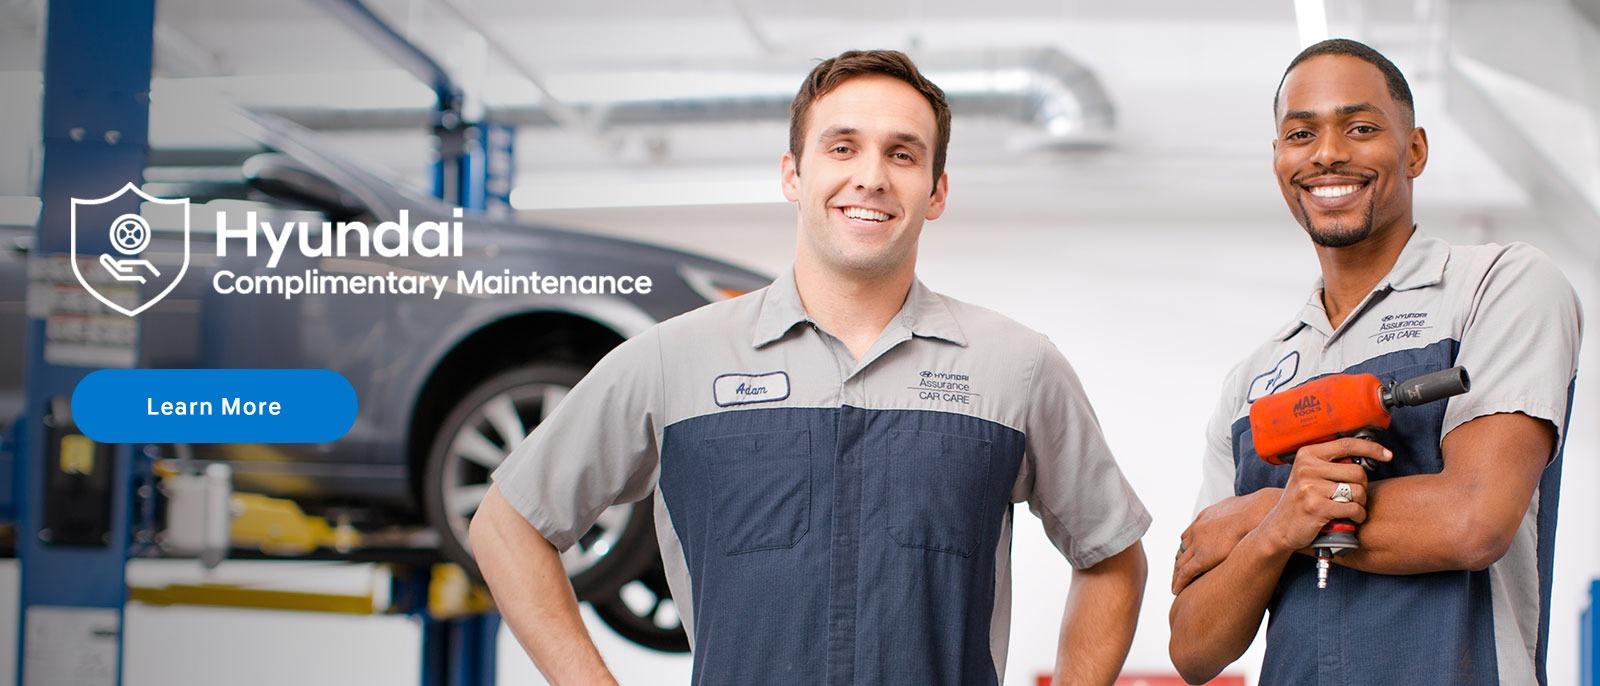 Hyundai Complimentary Maintenance